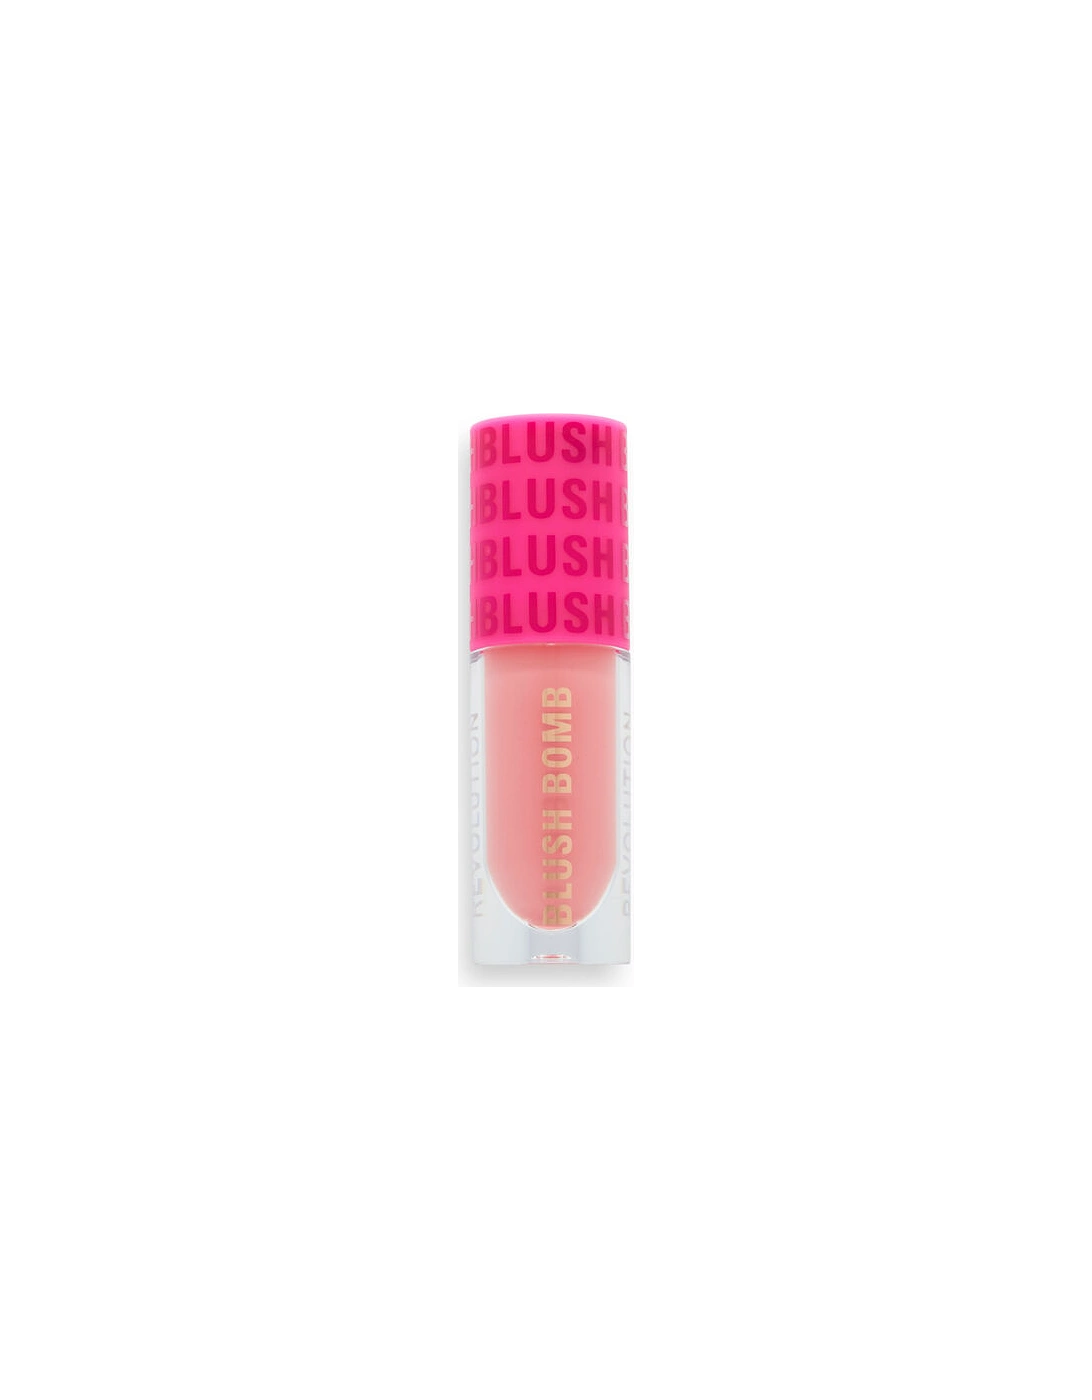 Makeup Blush Bomb Cream Blusher Dolly Rose, 2 of 1